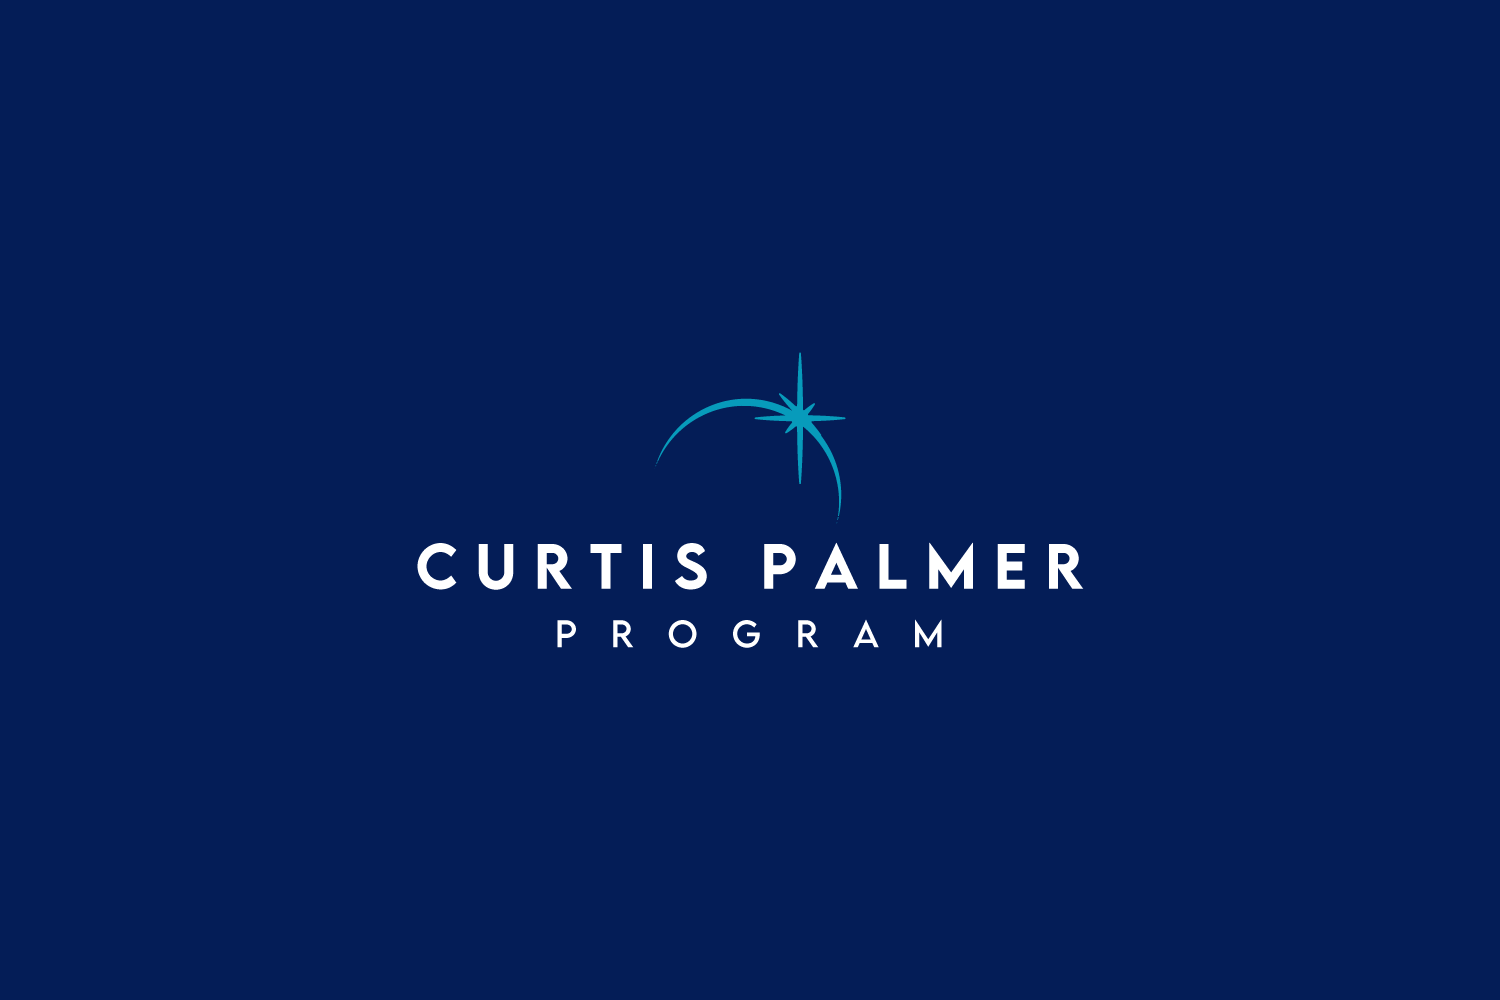 Curtis Palmer Program